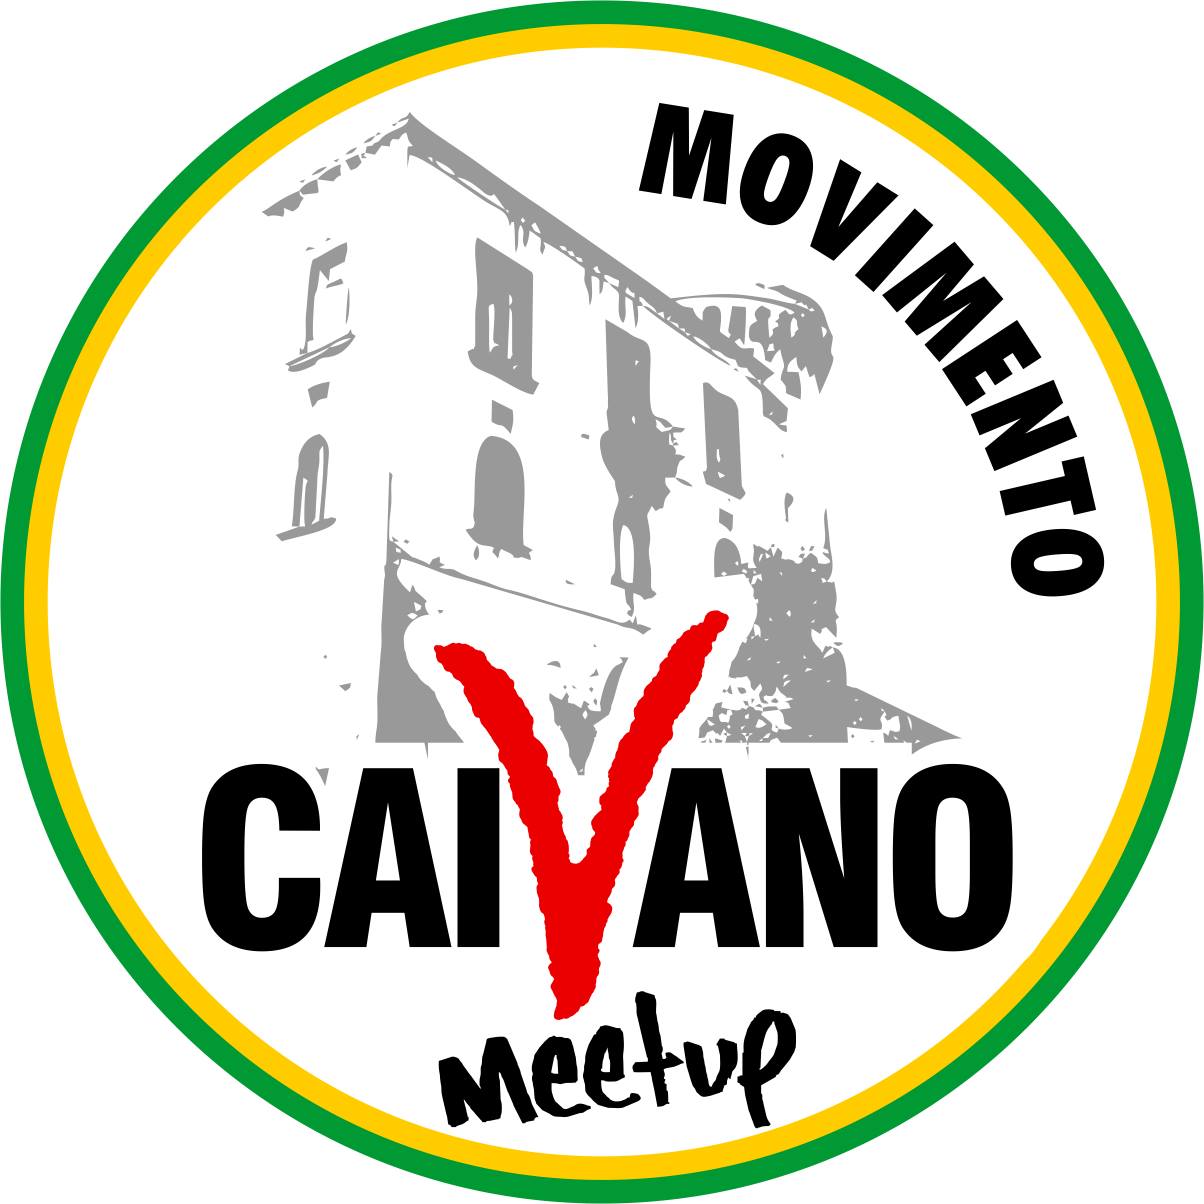 Movimento Caivano: Lettera aperta ai cittadini caivanesi